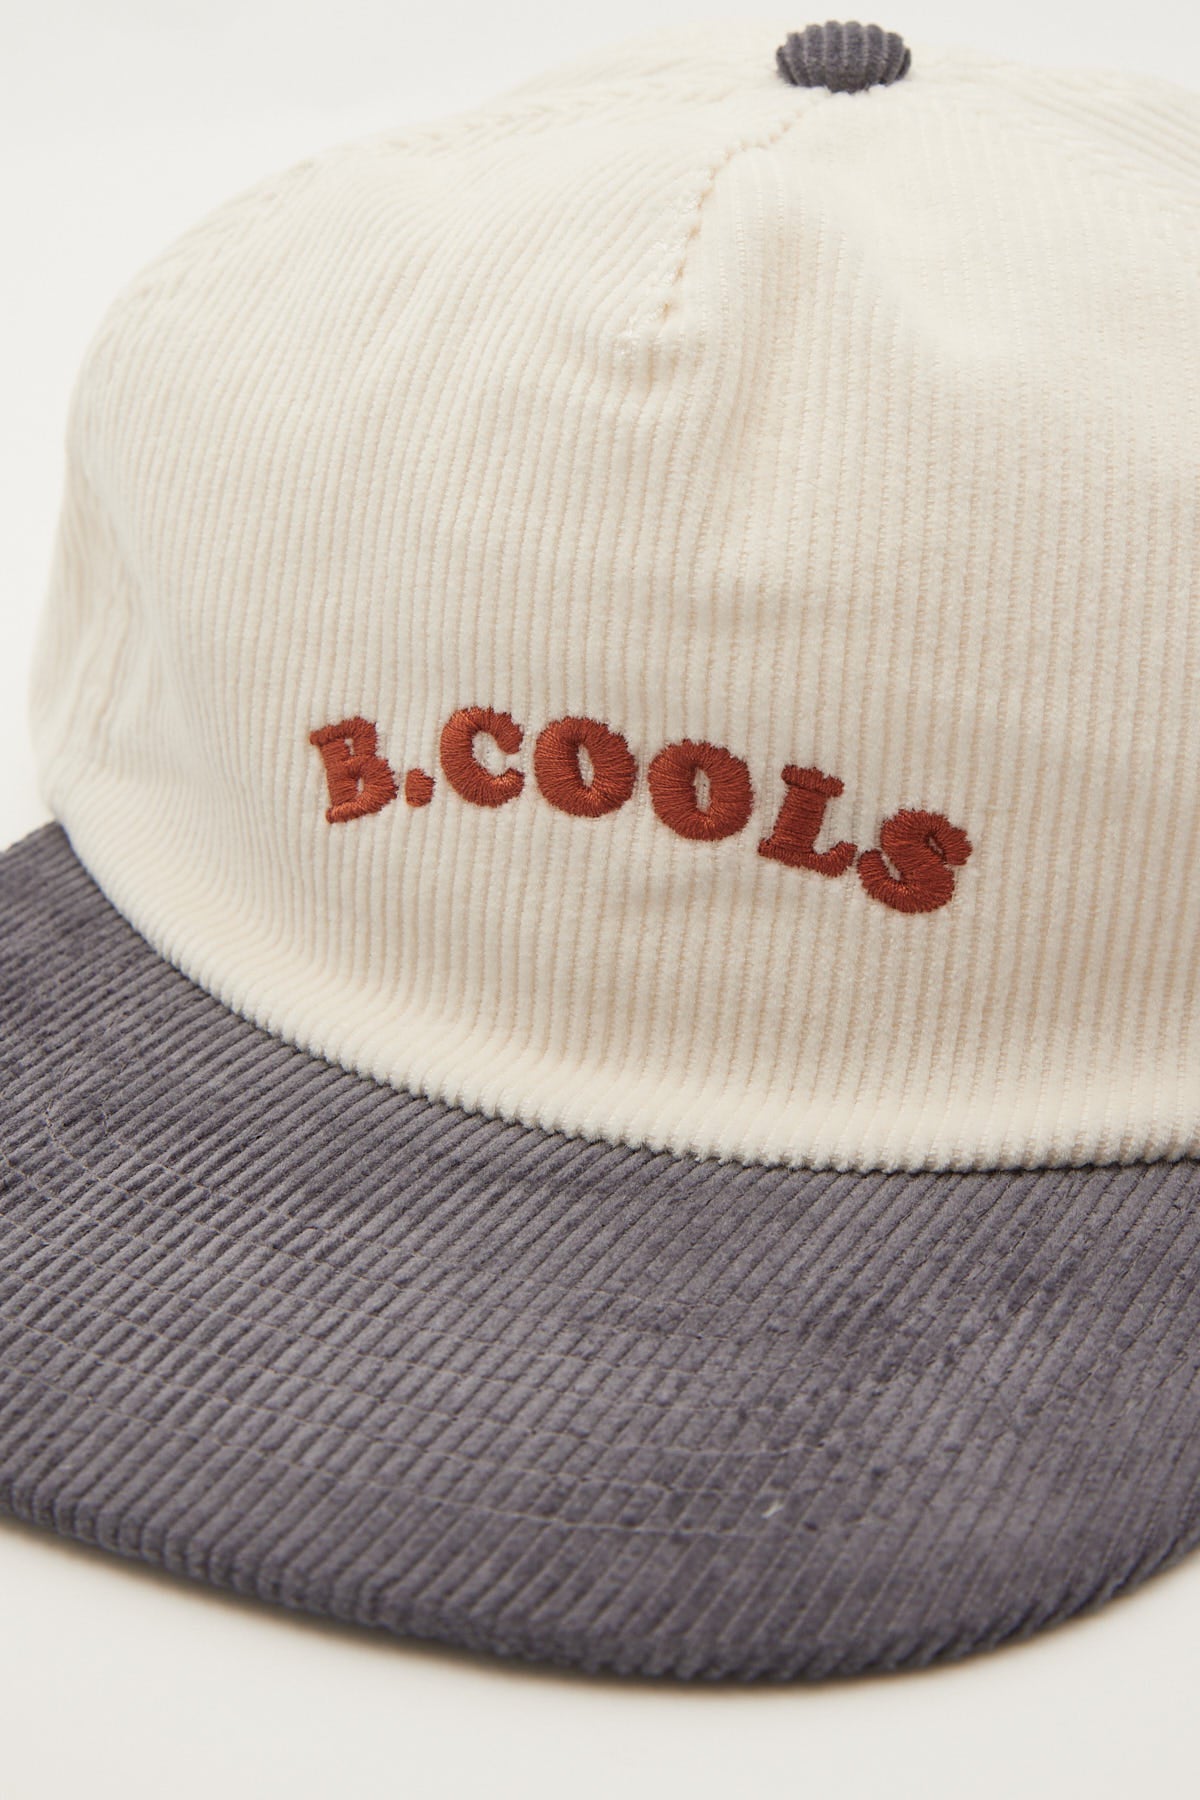 Barney Cools B.Cools Cap White/Blue Cord